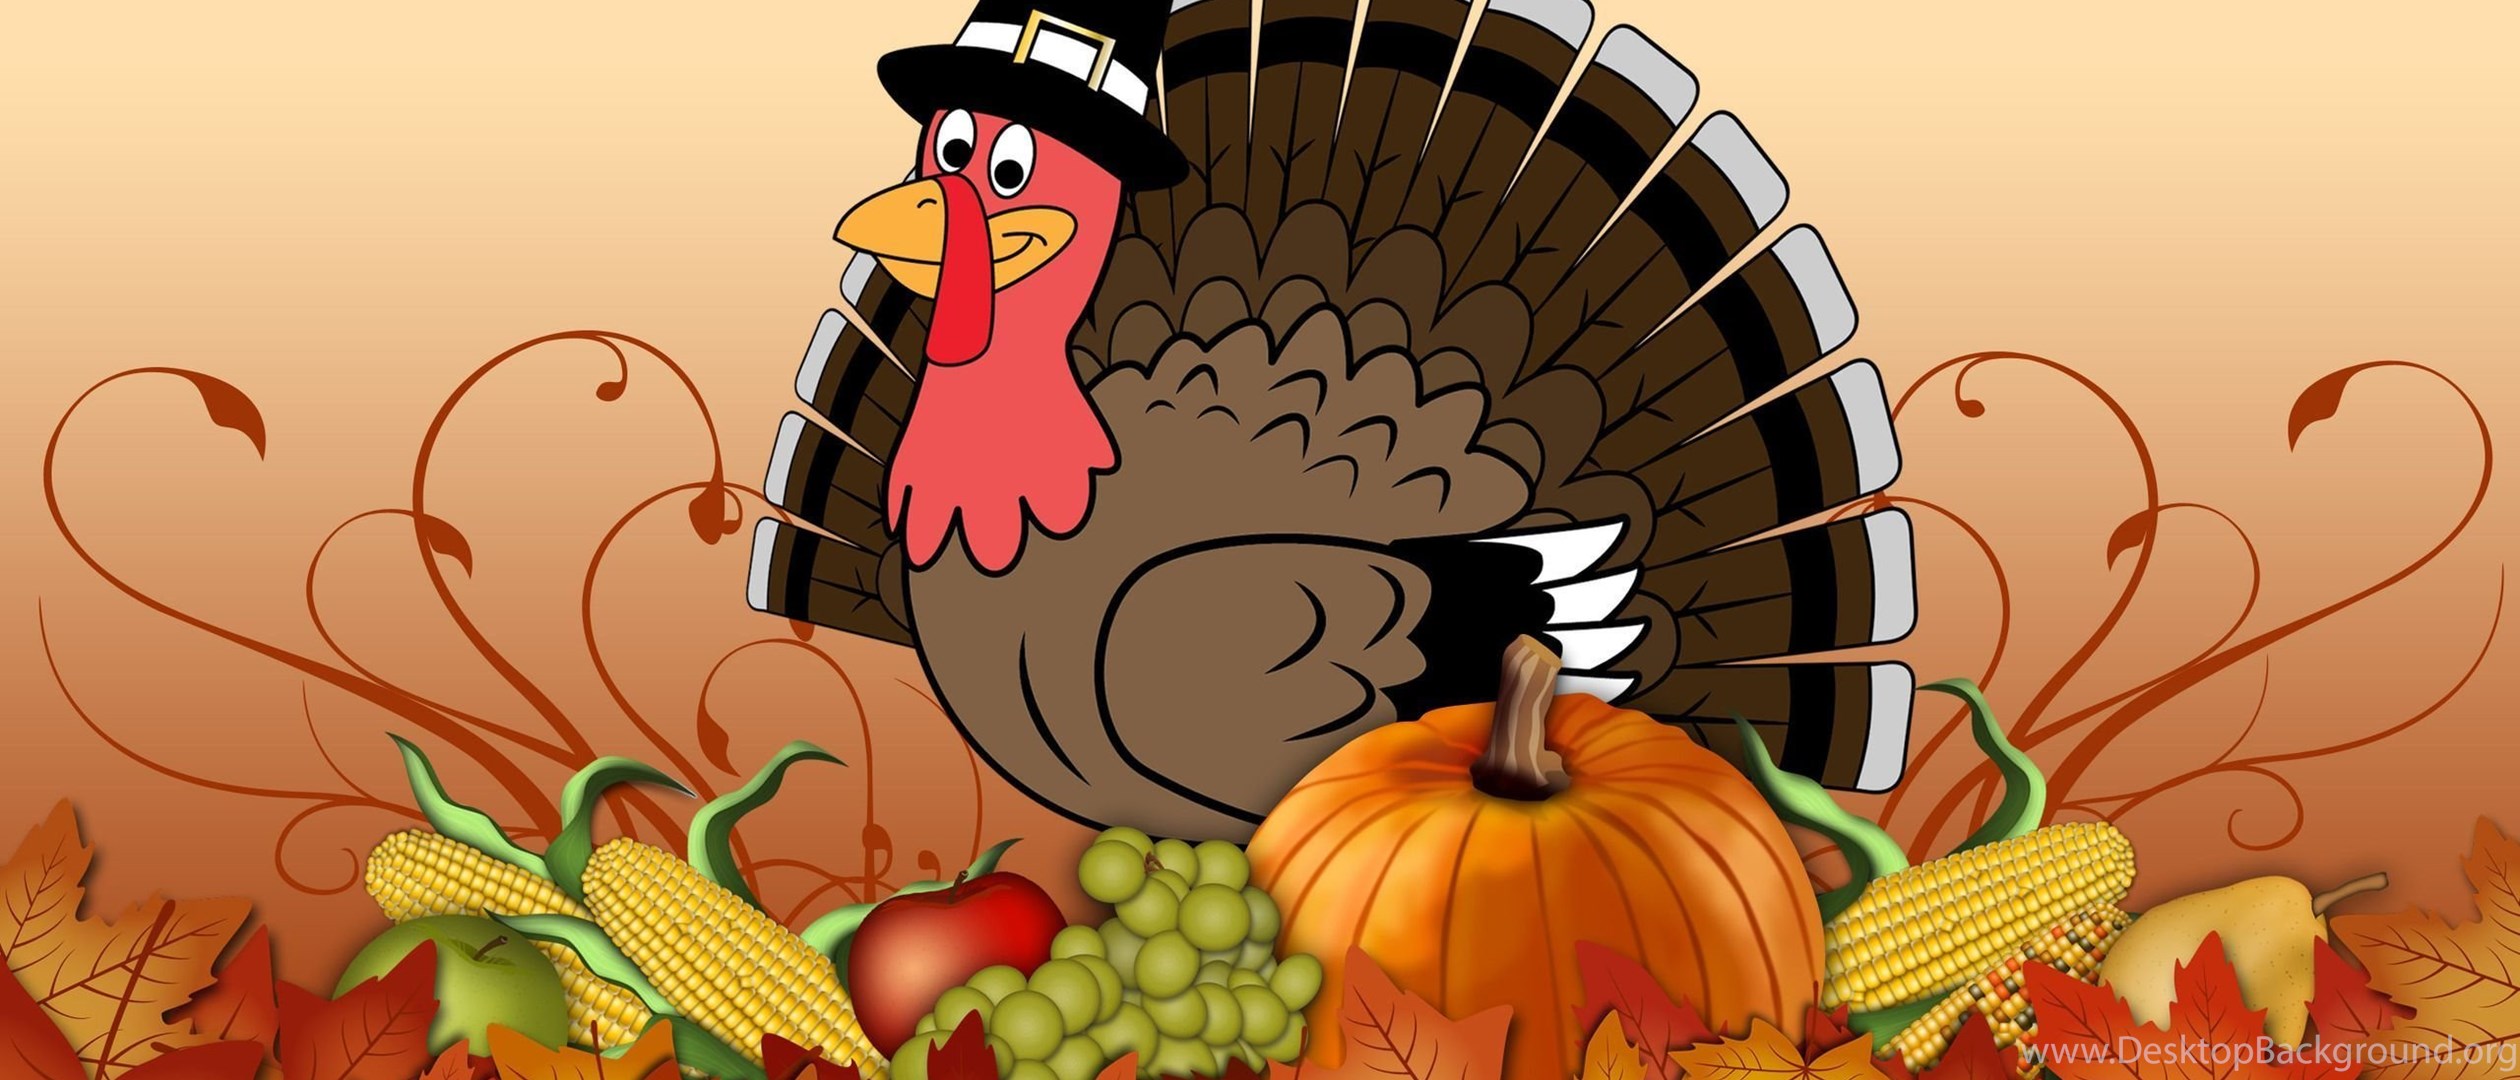 Download Happy Thanksgiving Turkey wallpaper.jpg Widescreen Wide 21:9 2520x...